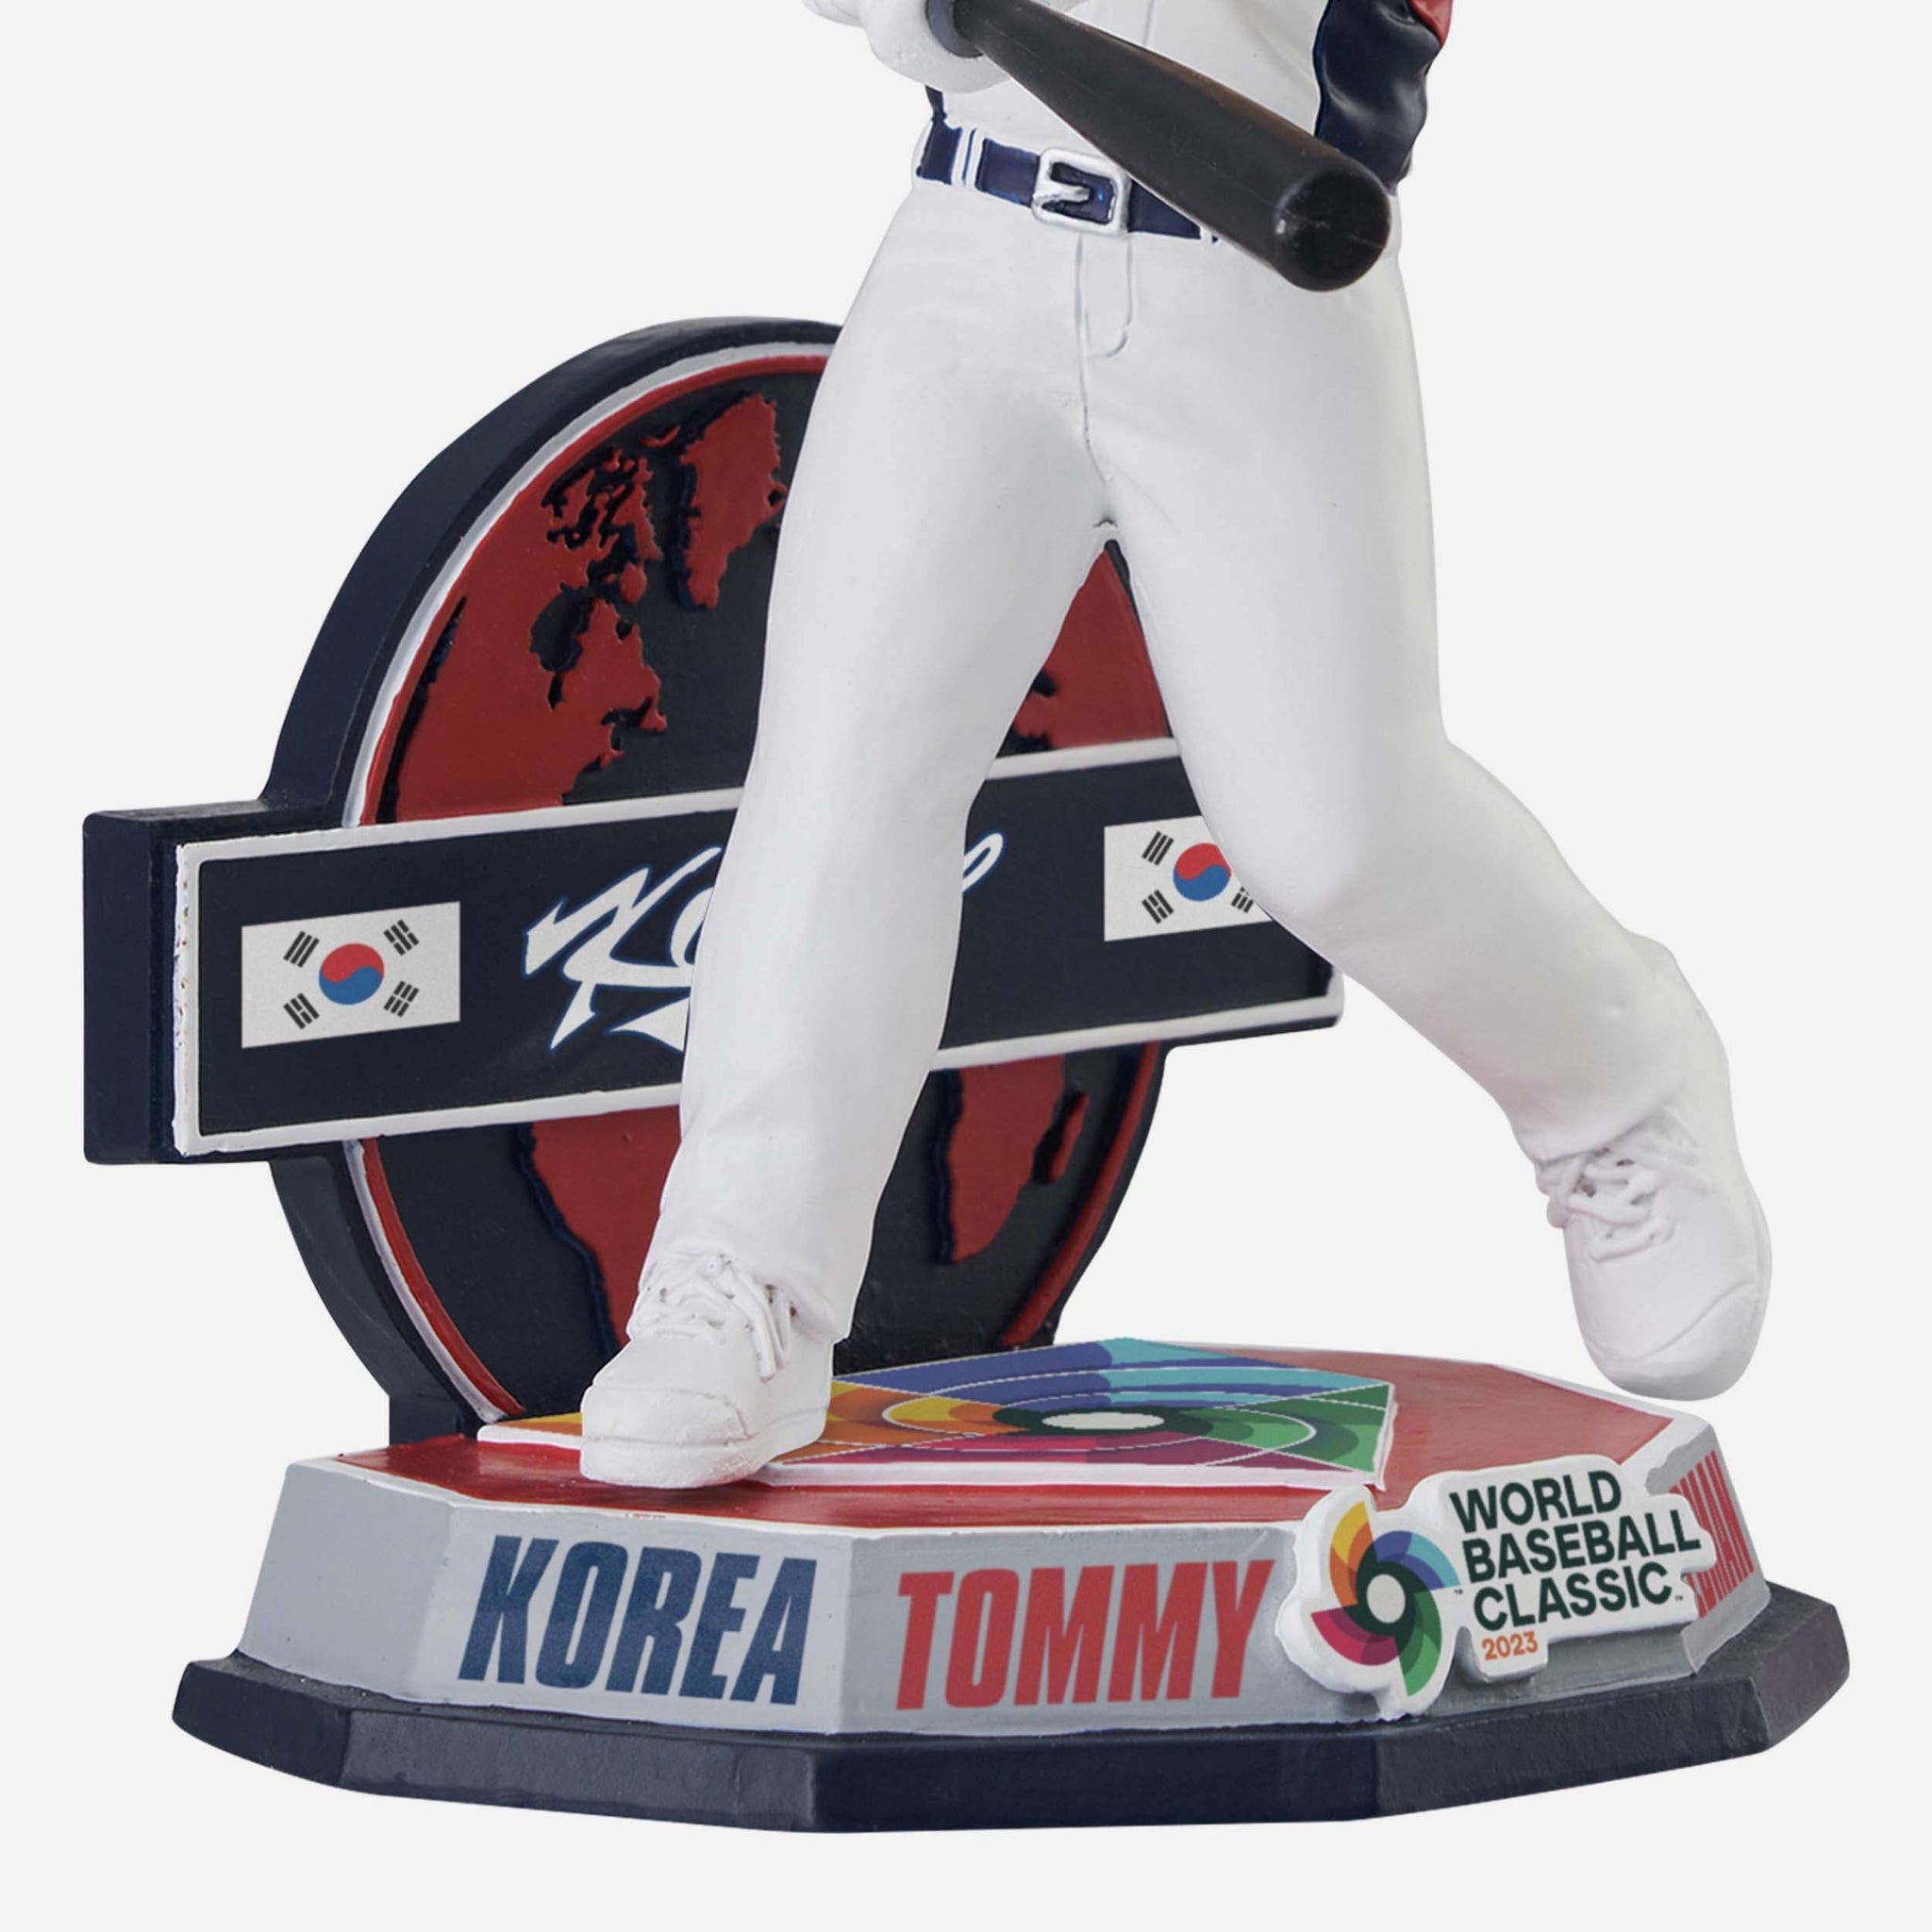 03rd Mar, 2023. Tommy Edman of S. Korean WBC team Tommy